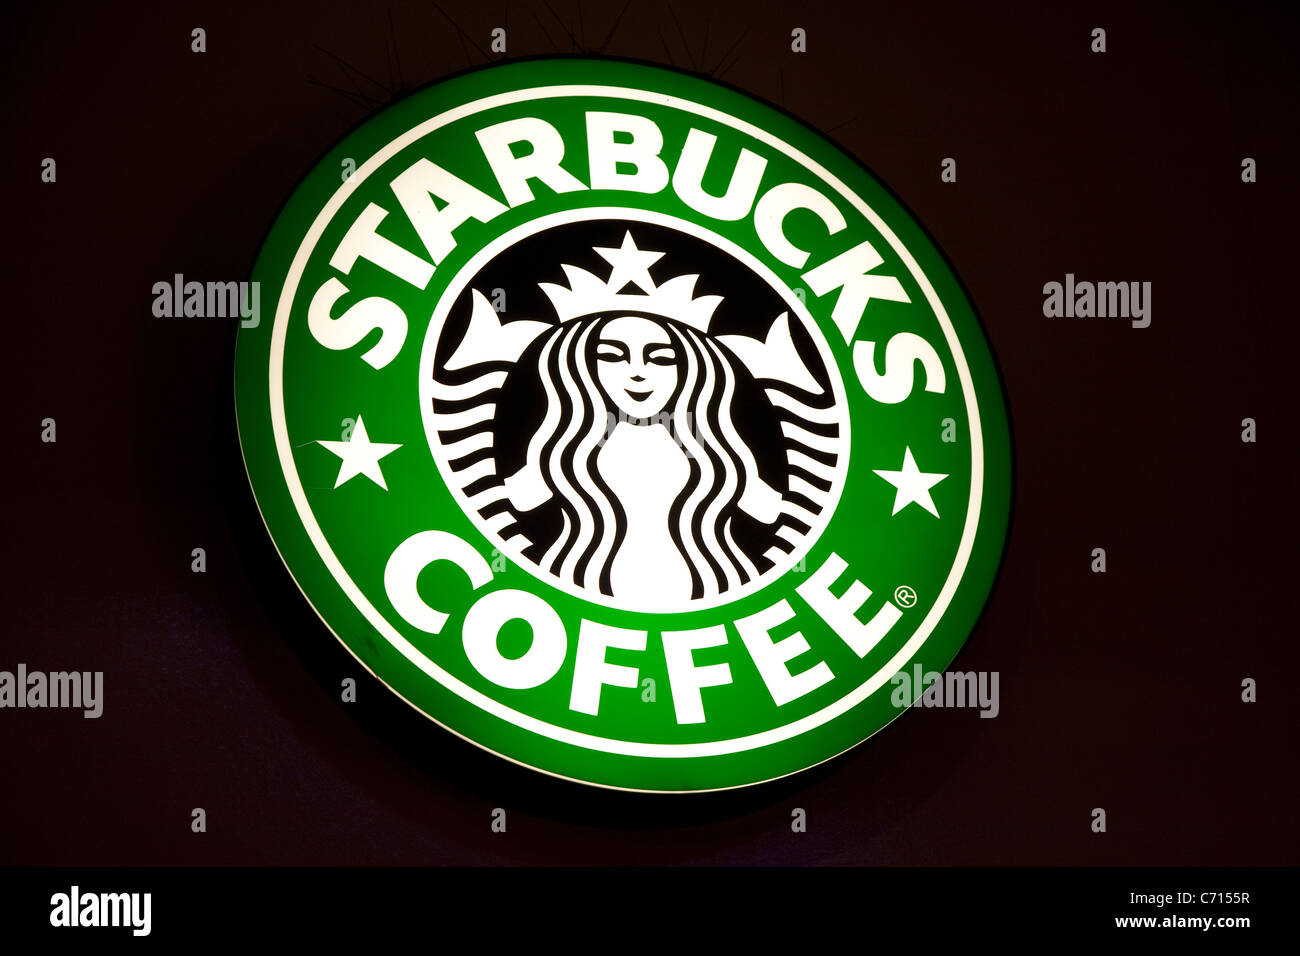 Starbucks Coffee Logo on Shop Front in London Stock Photo